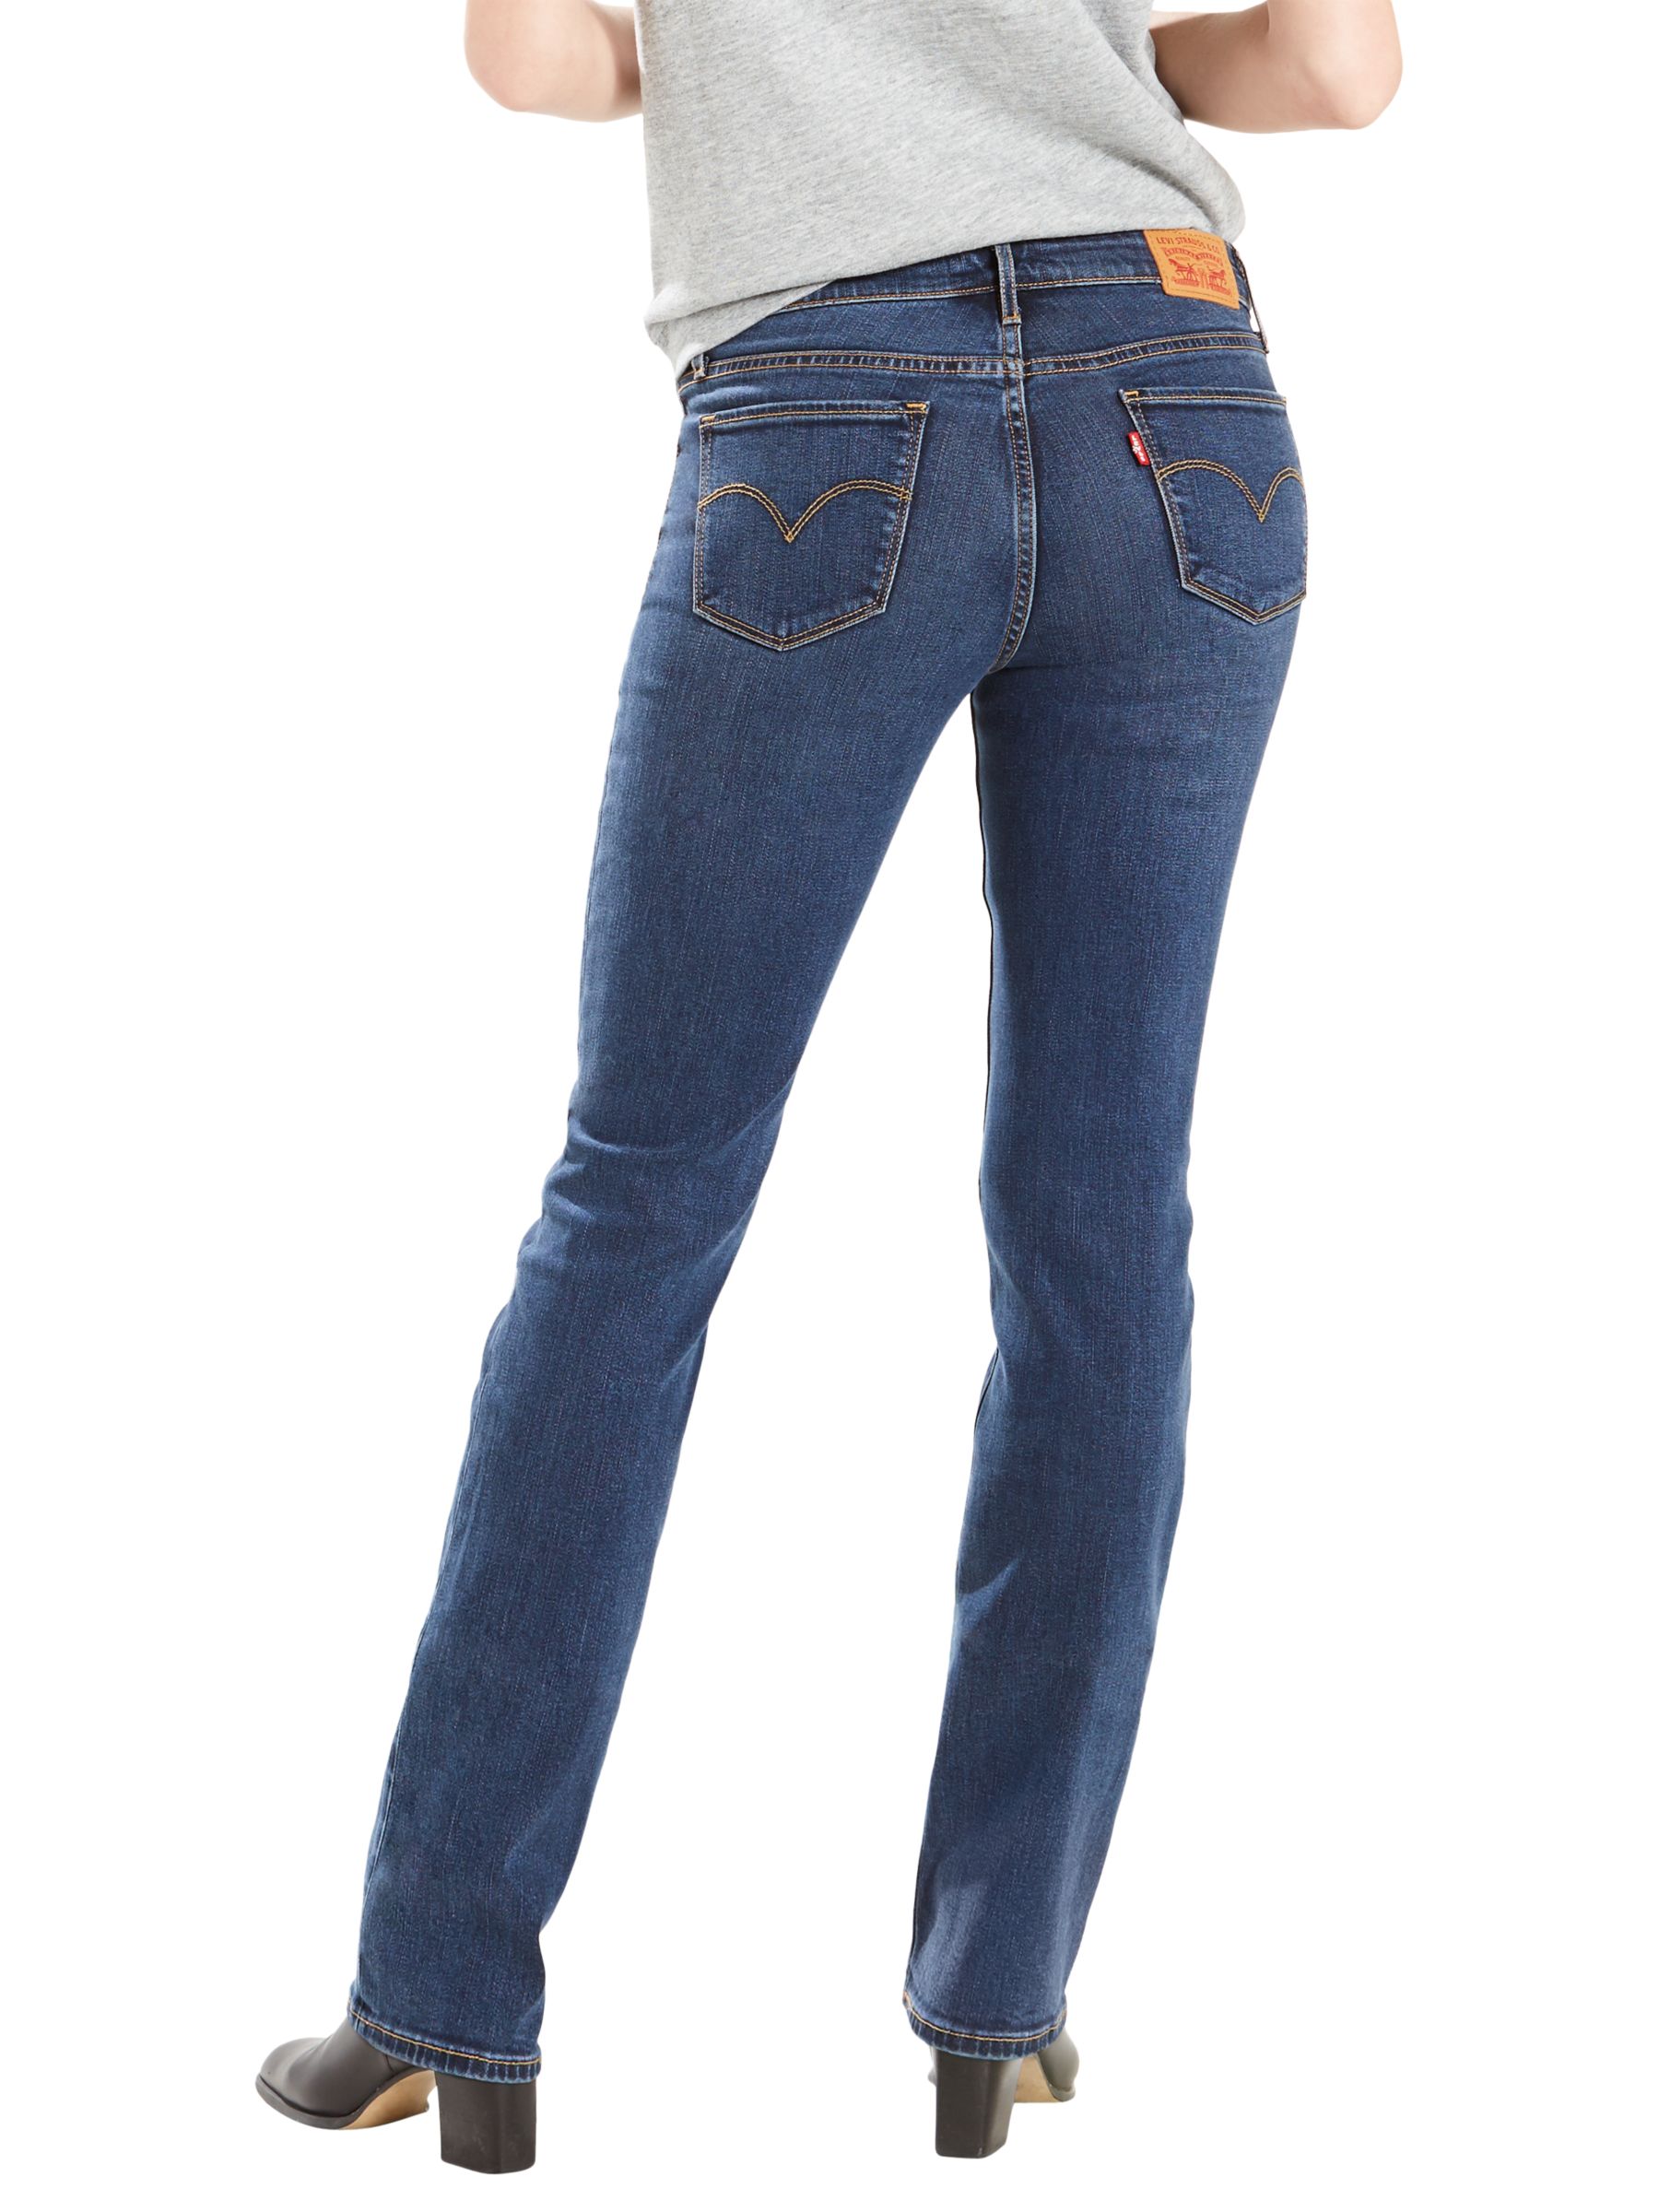 levi's 714 straight leg jeans